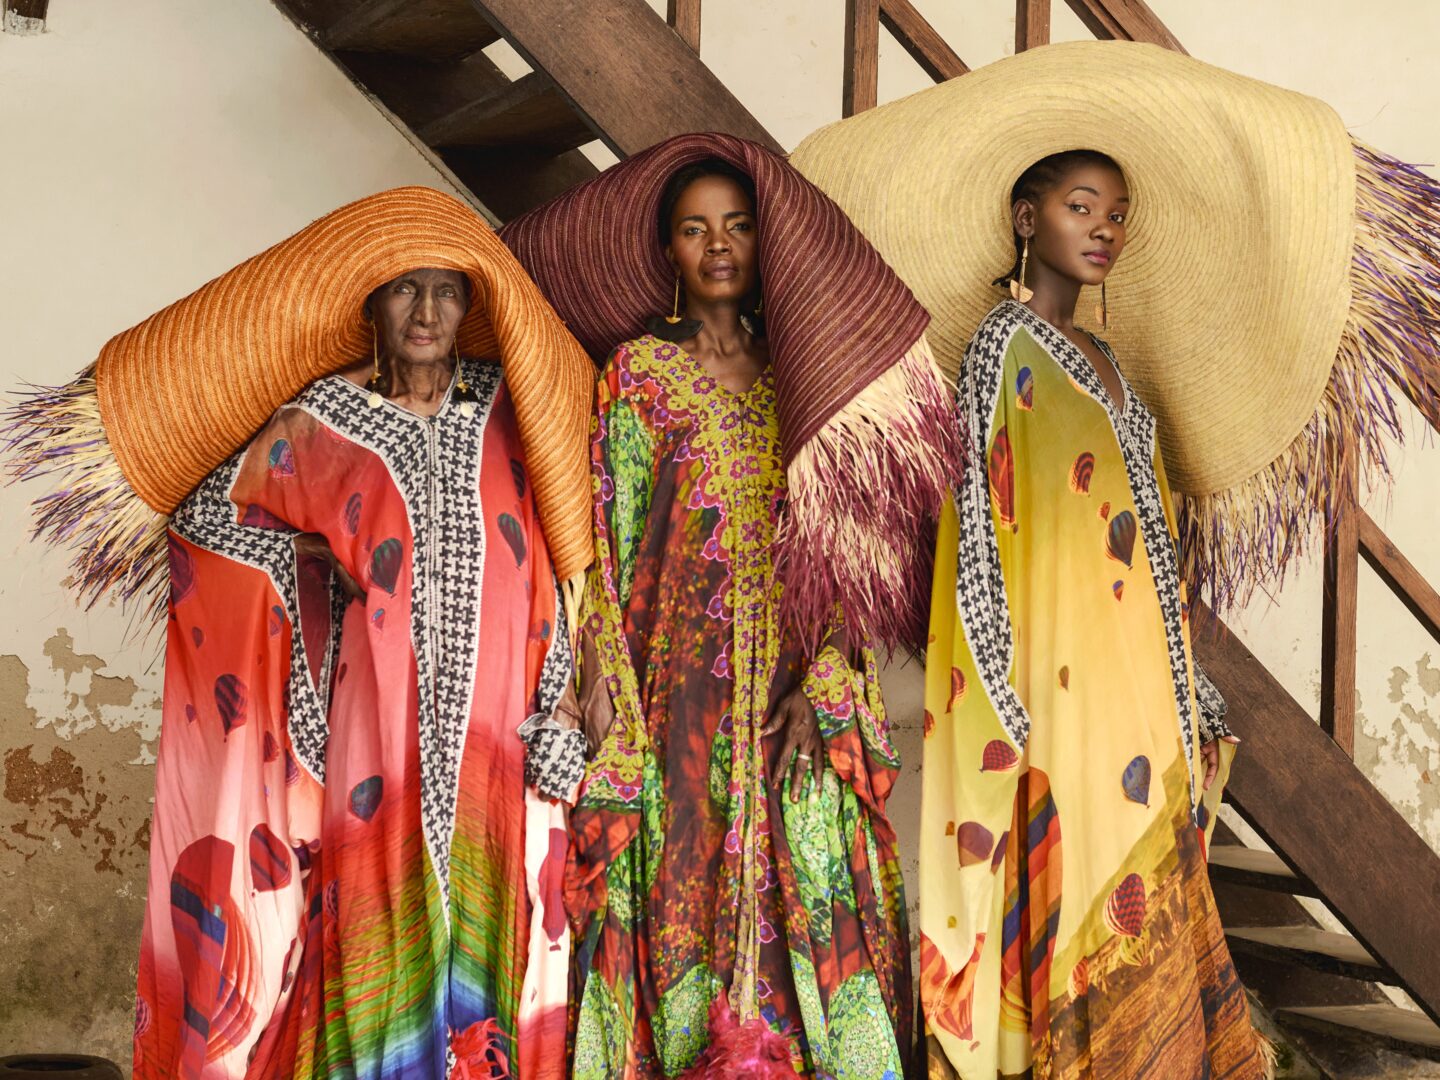 5 Ways to Use African Mud Cloth in Home Decor - Jamila Kyari